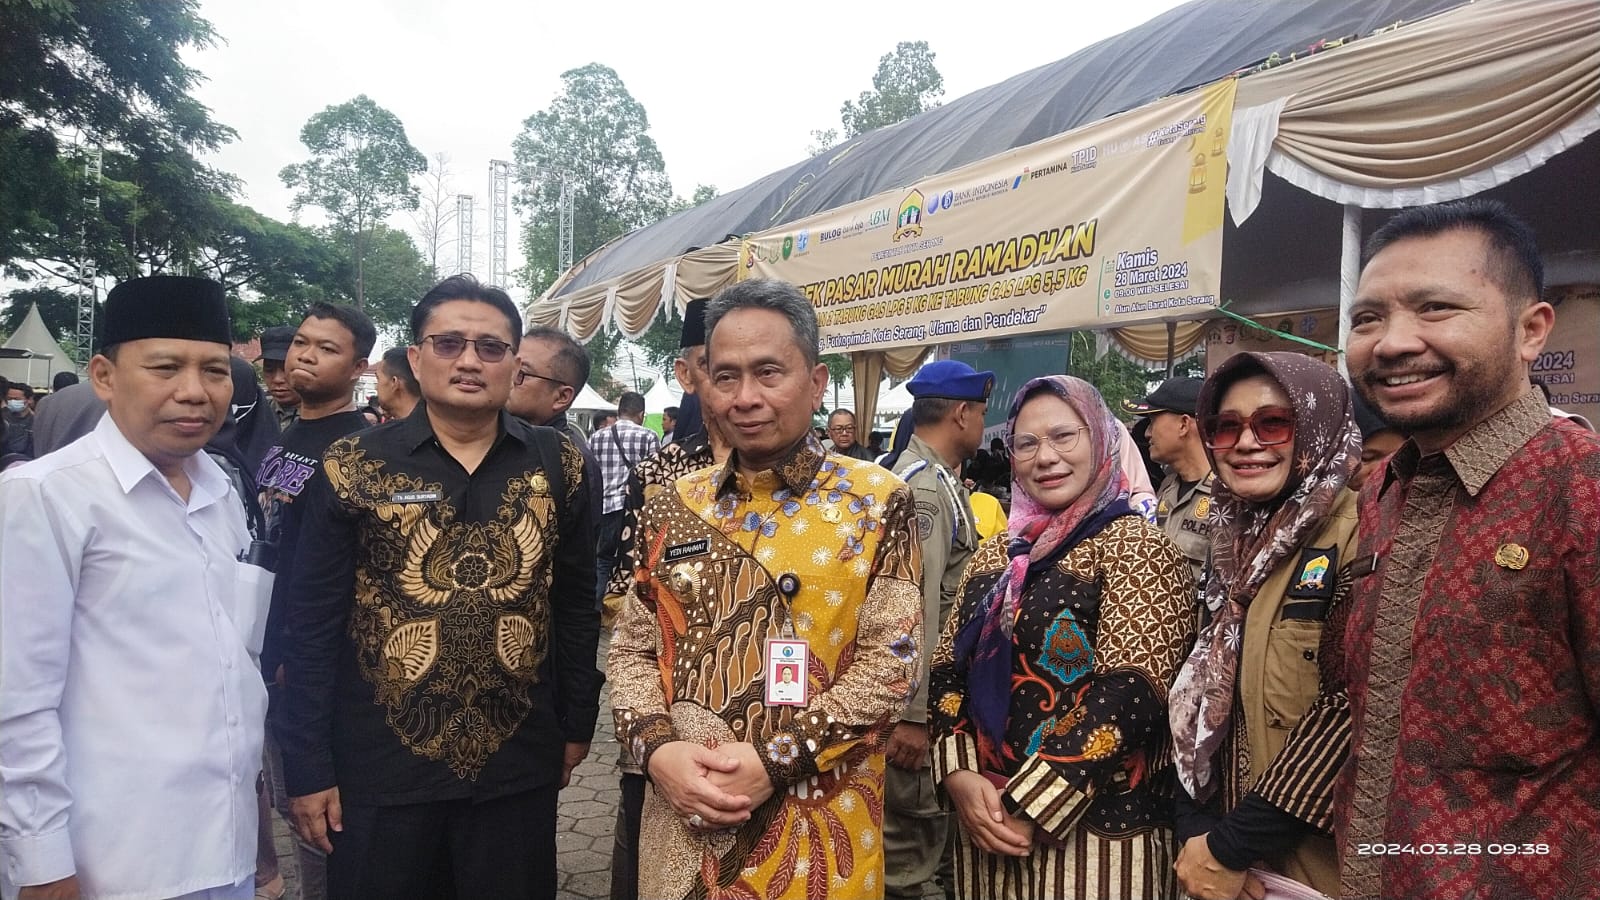 Kembali digelar GPM di Kota Serang, Pj Wali Kota Serang Yedi Rahmat: ini bukti dukungan BUMN dan BUMD ke masyarakat Kota Serang